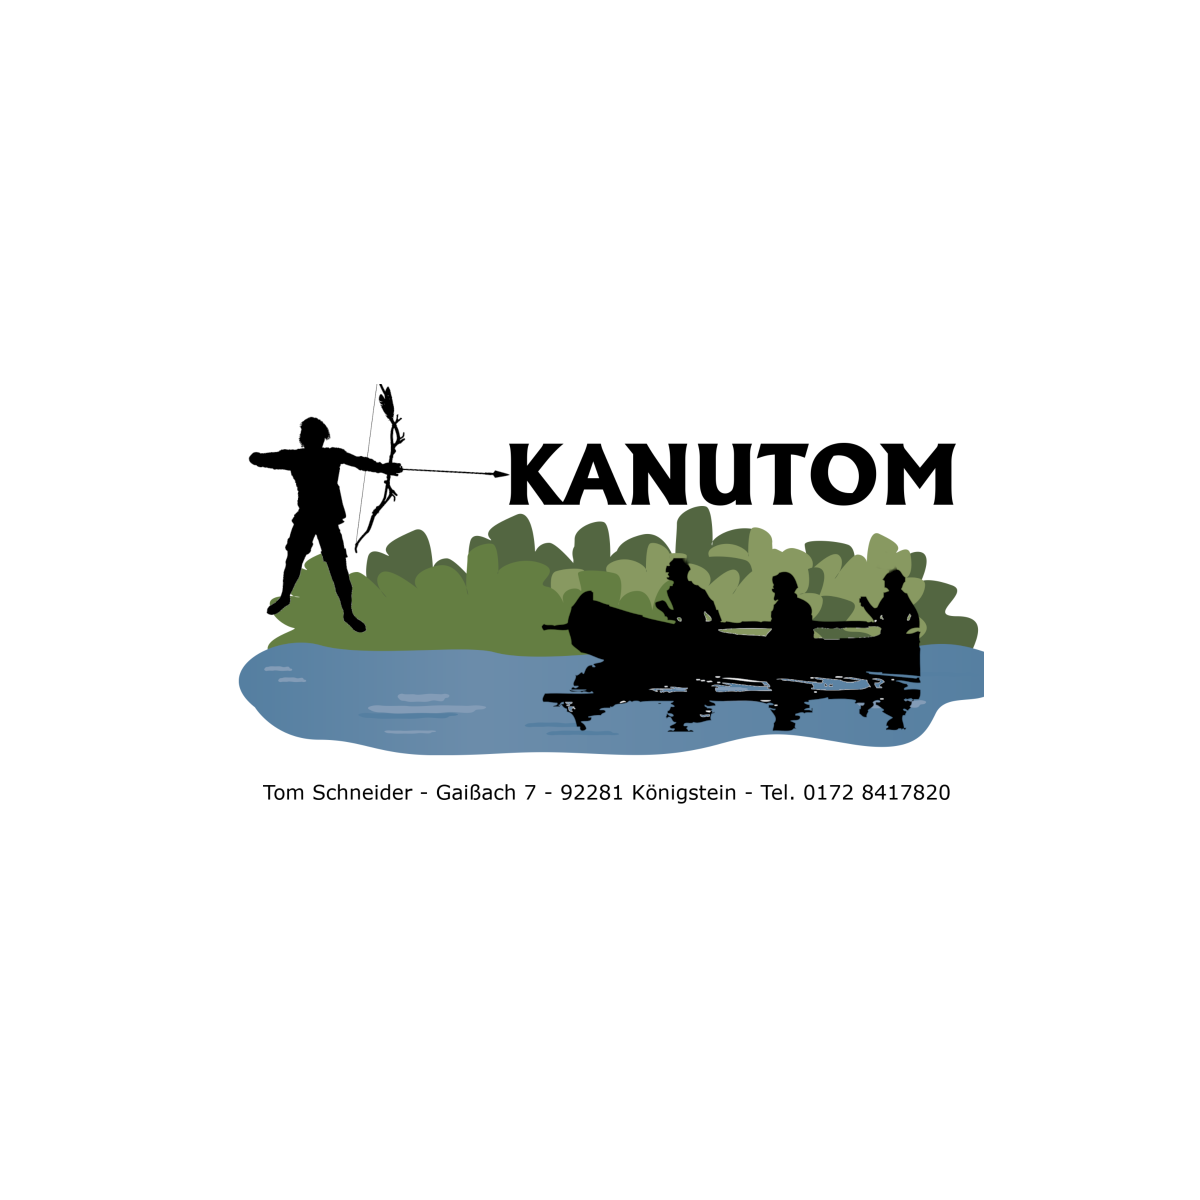 Kanuverleih und Bogensport Kanutom Logo